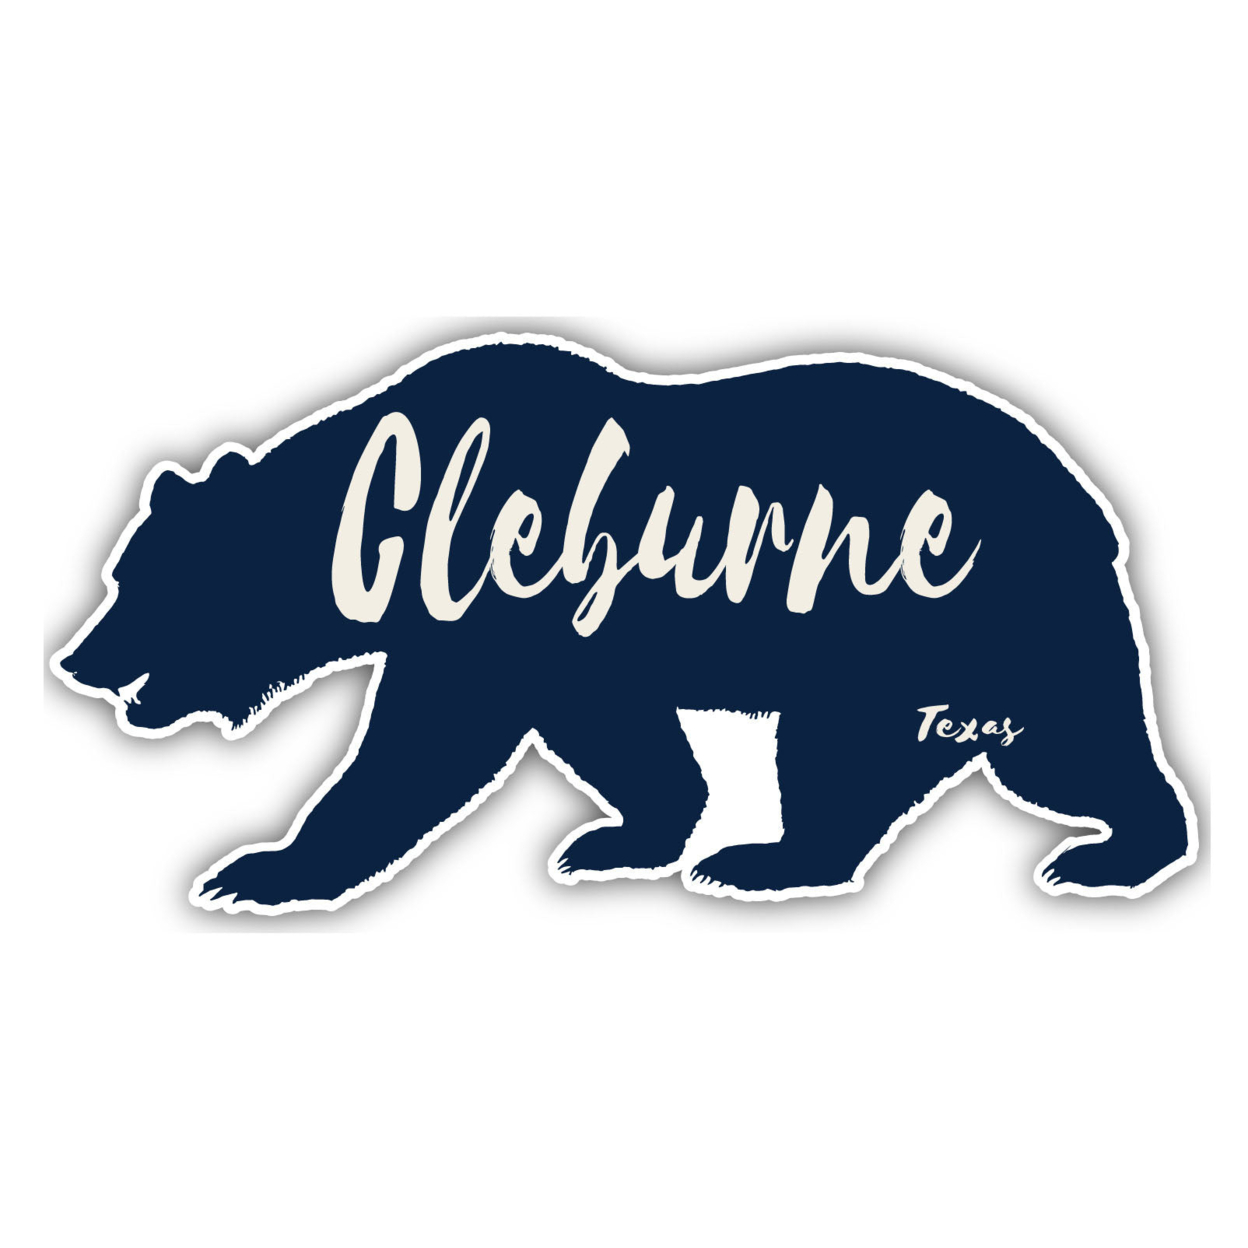 Cleburne Texas Souvenir Decorative Stickers (Choose Theme And Size) - Single Unit, 6-Inch, Bear